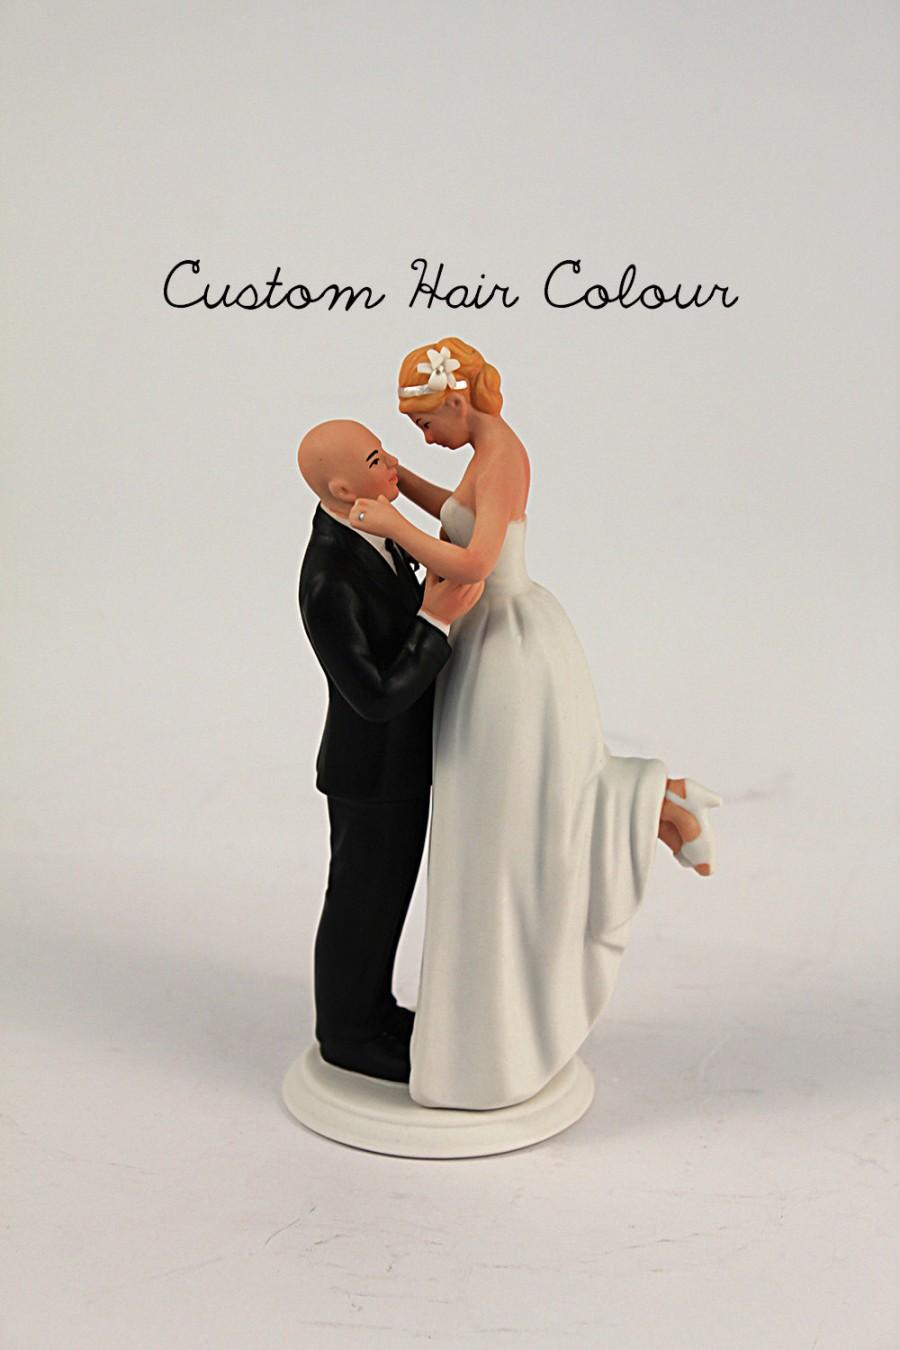 Свадьба - True Romance Interlocking Bride and Groom Cake Topper - Medium Skin Tone Bald Groom and Light Skin Tone Bride - Personalized Wedding Toppers